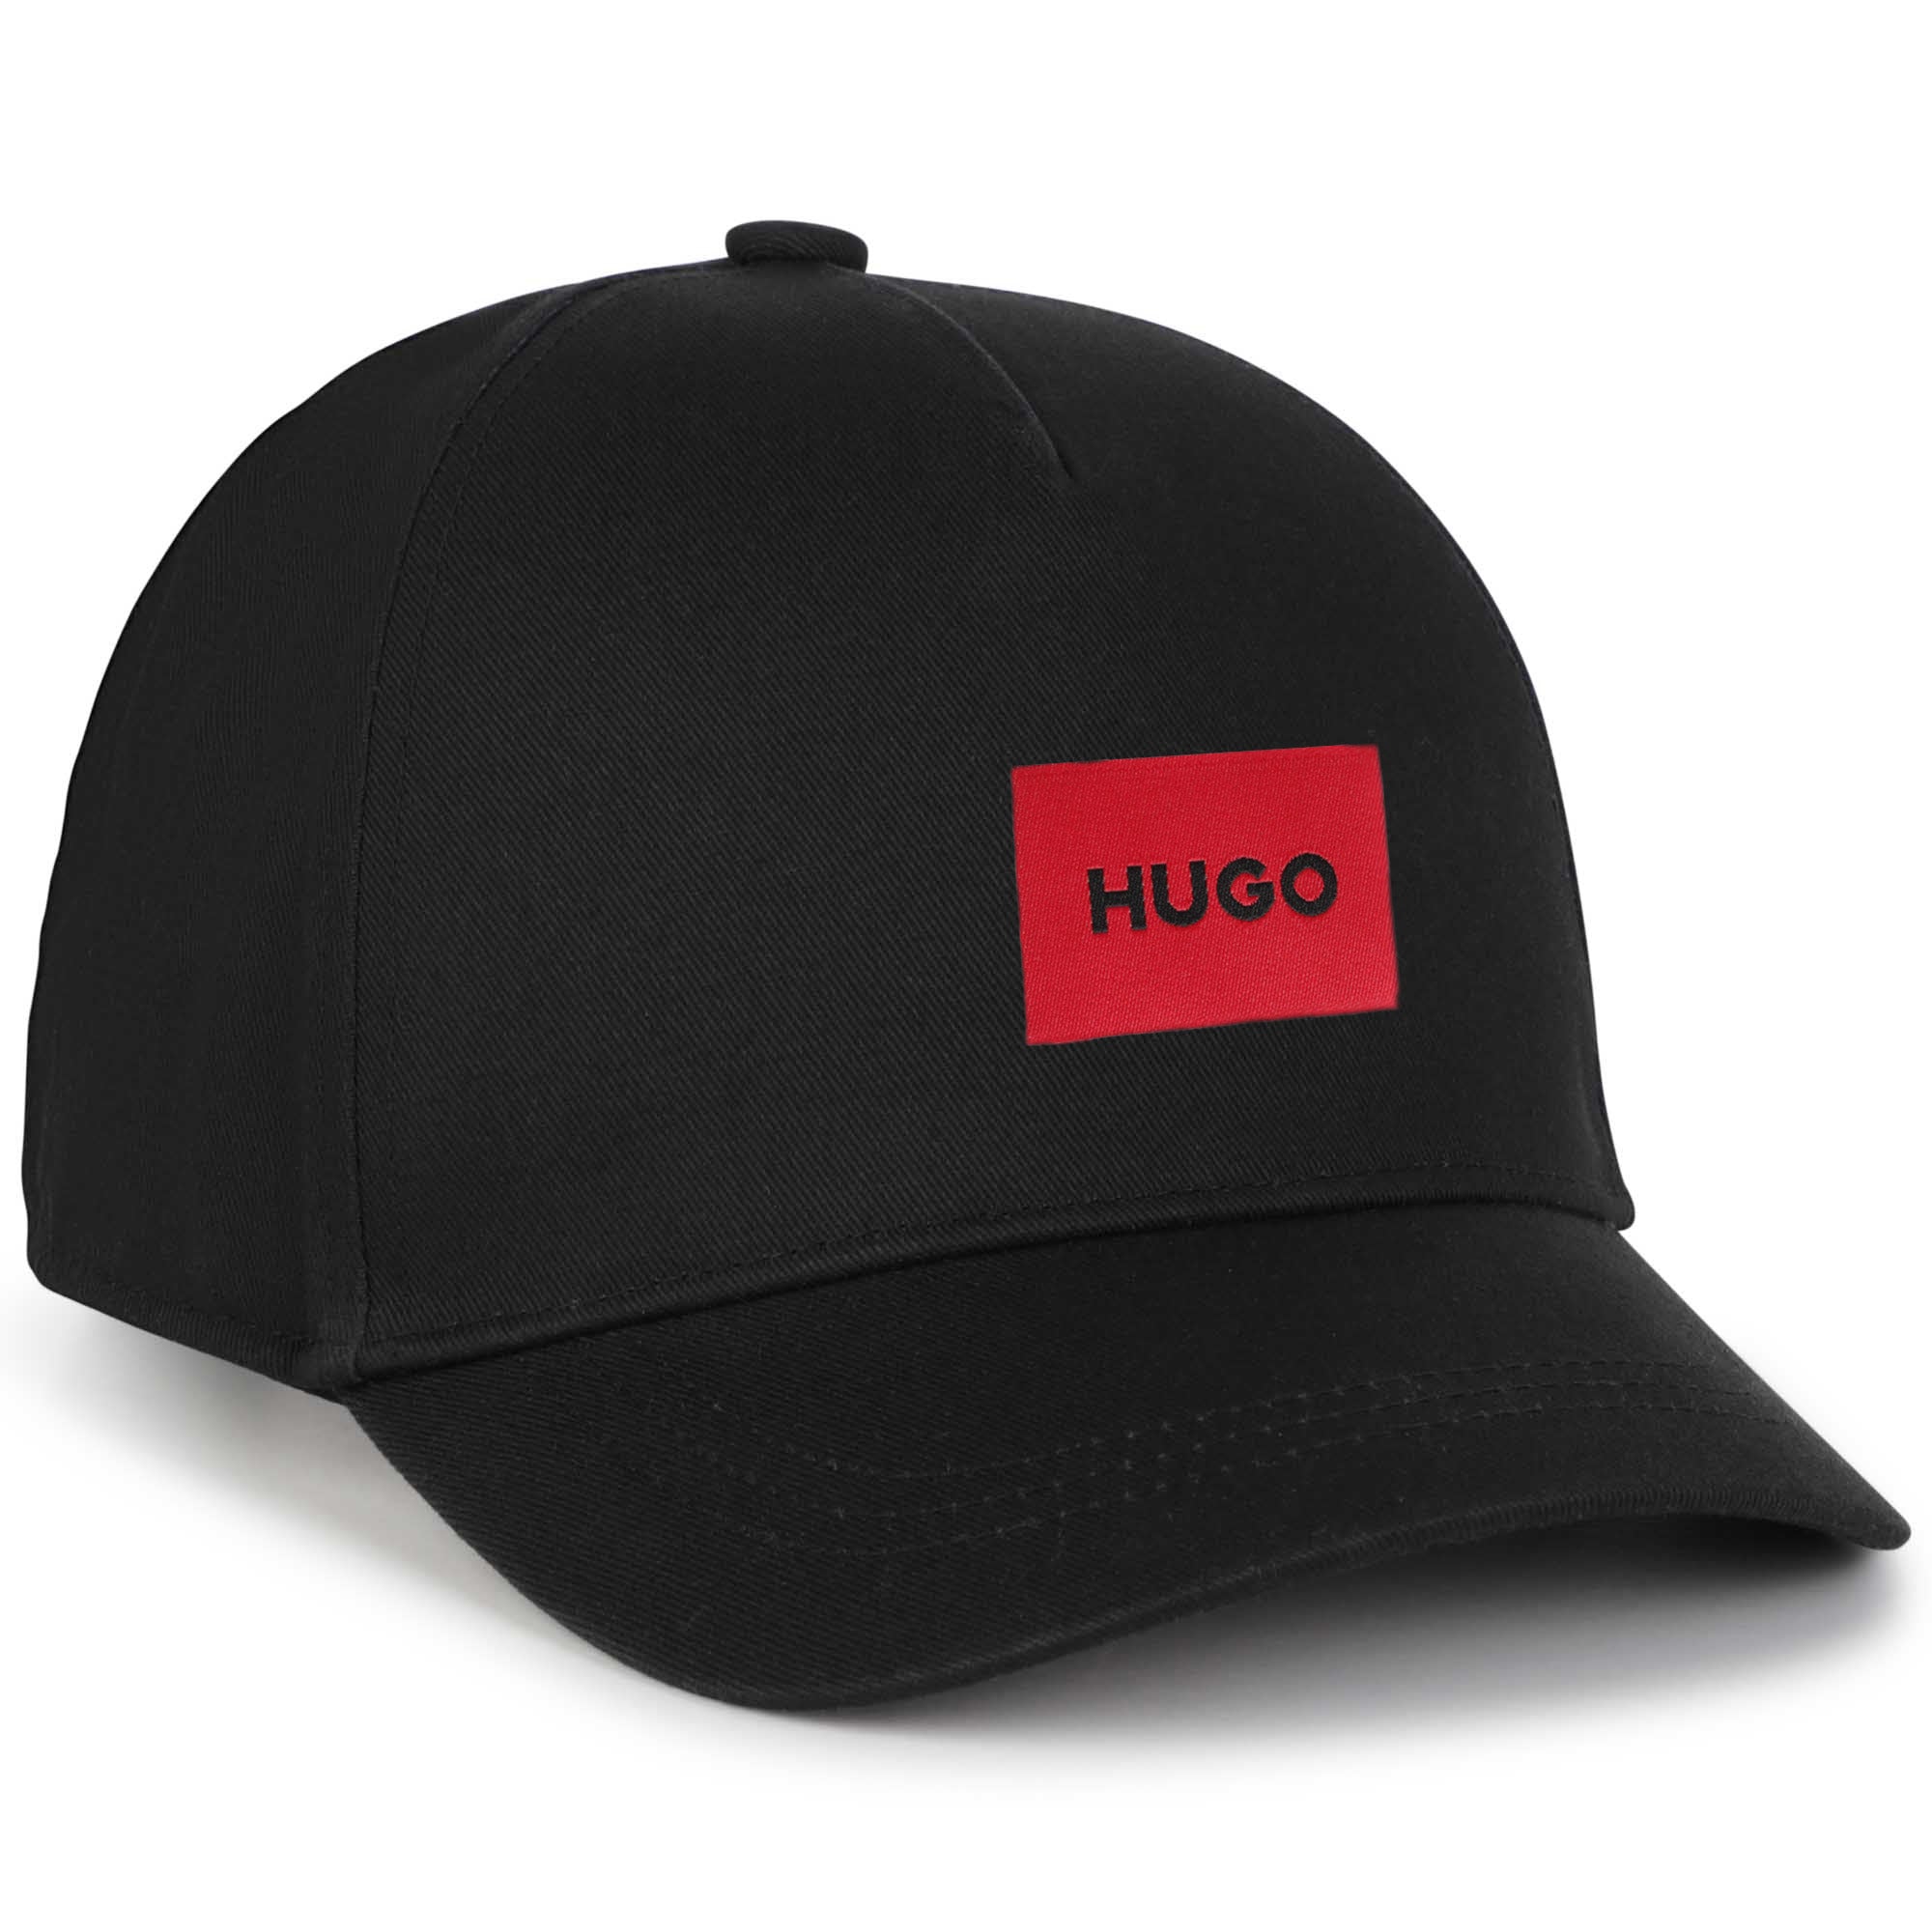 Hugo Black Baseball Cap